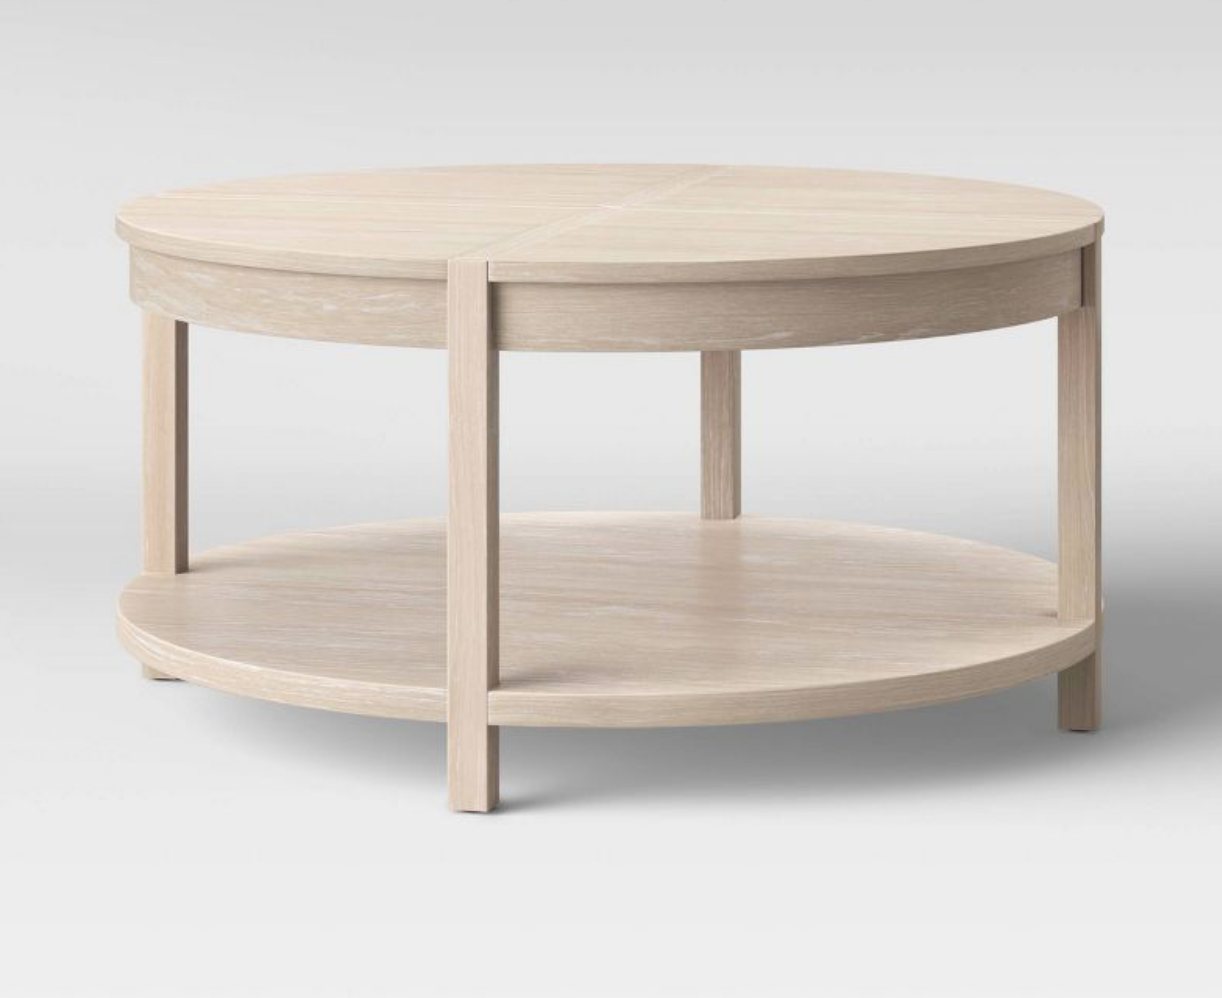 Porto Round Wood Coffee Table - Target - $200